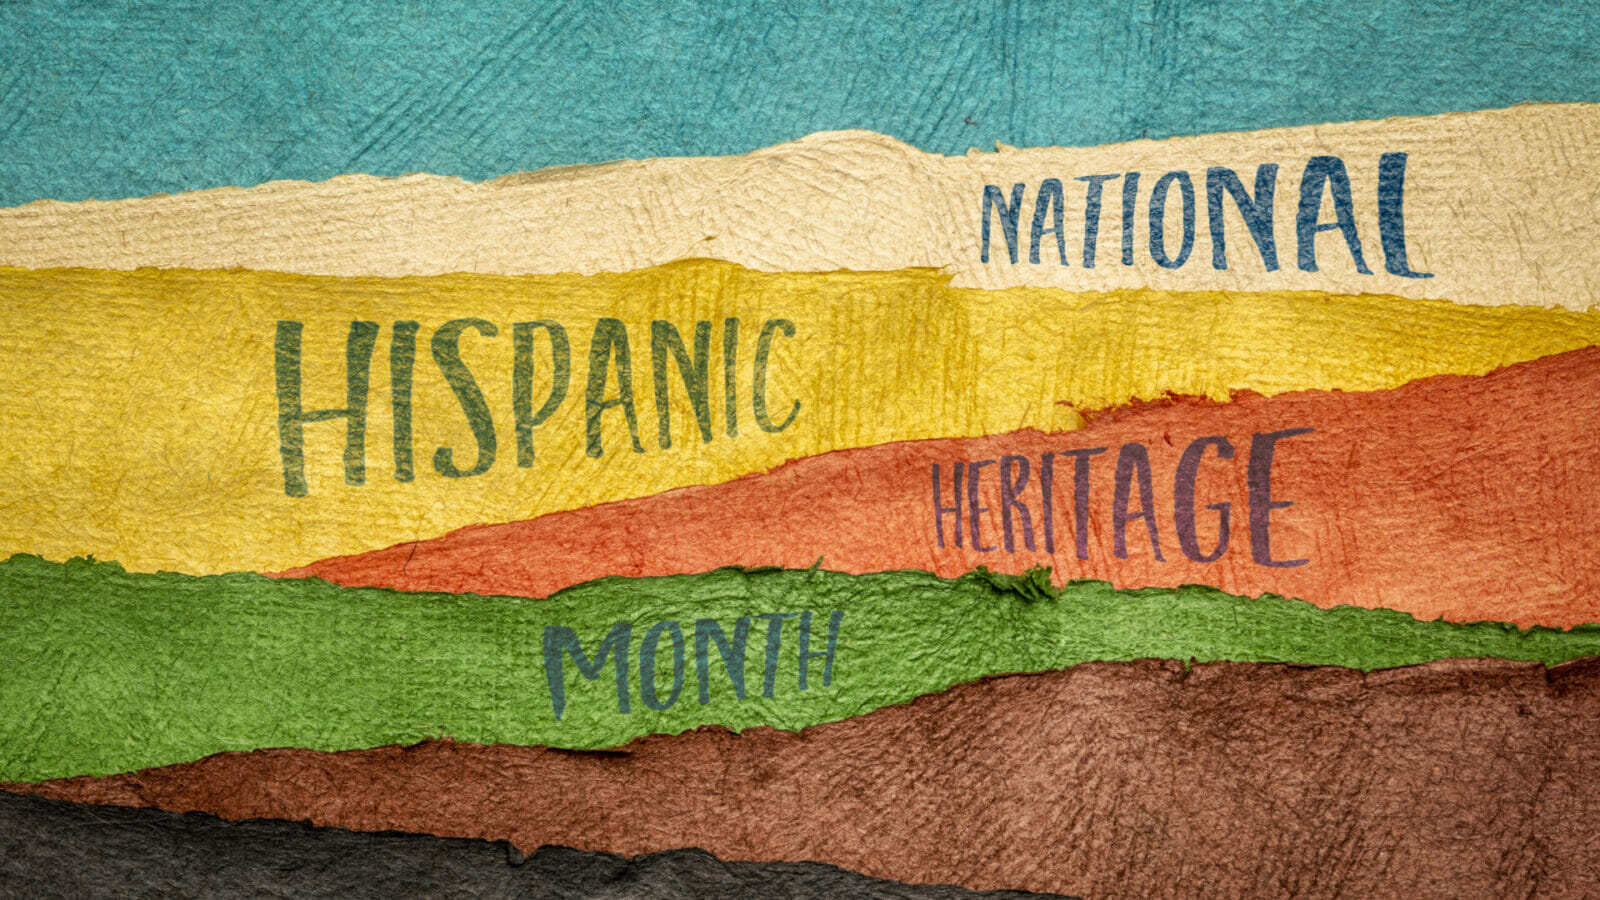 Hispanic Heritage Month Spotlight